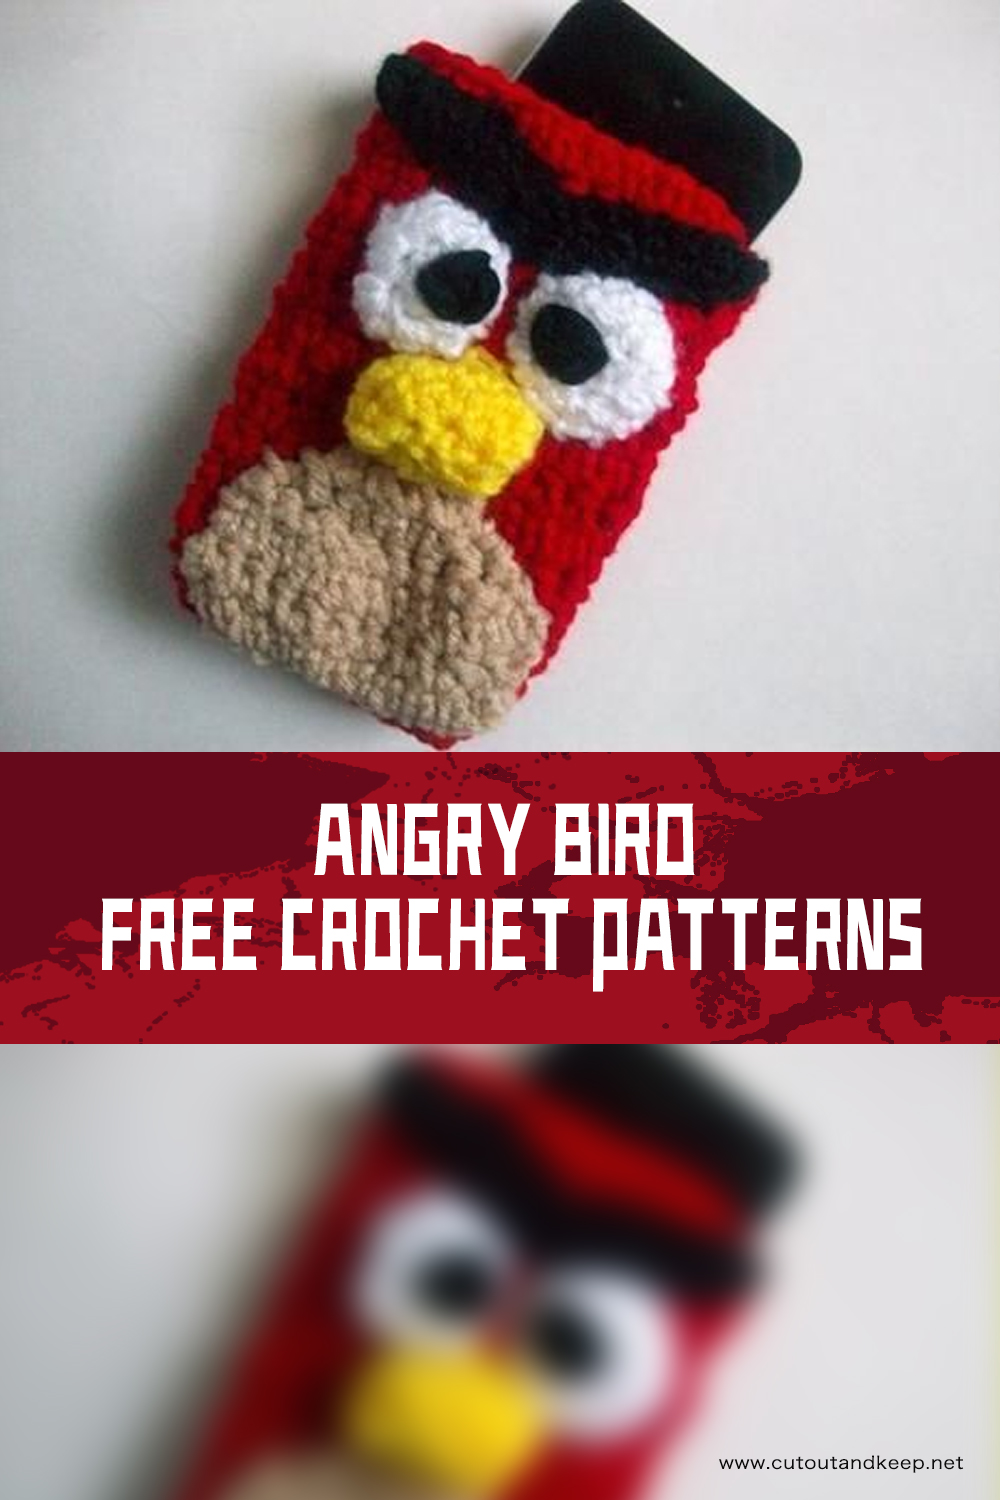 FREE Angry Bird Crochet Patterns